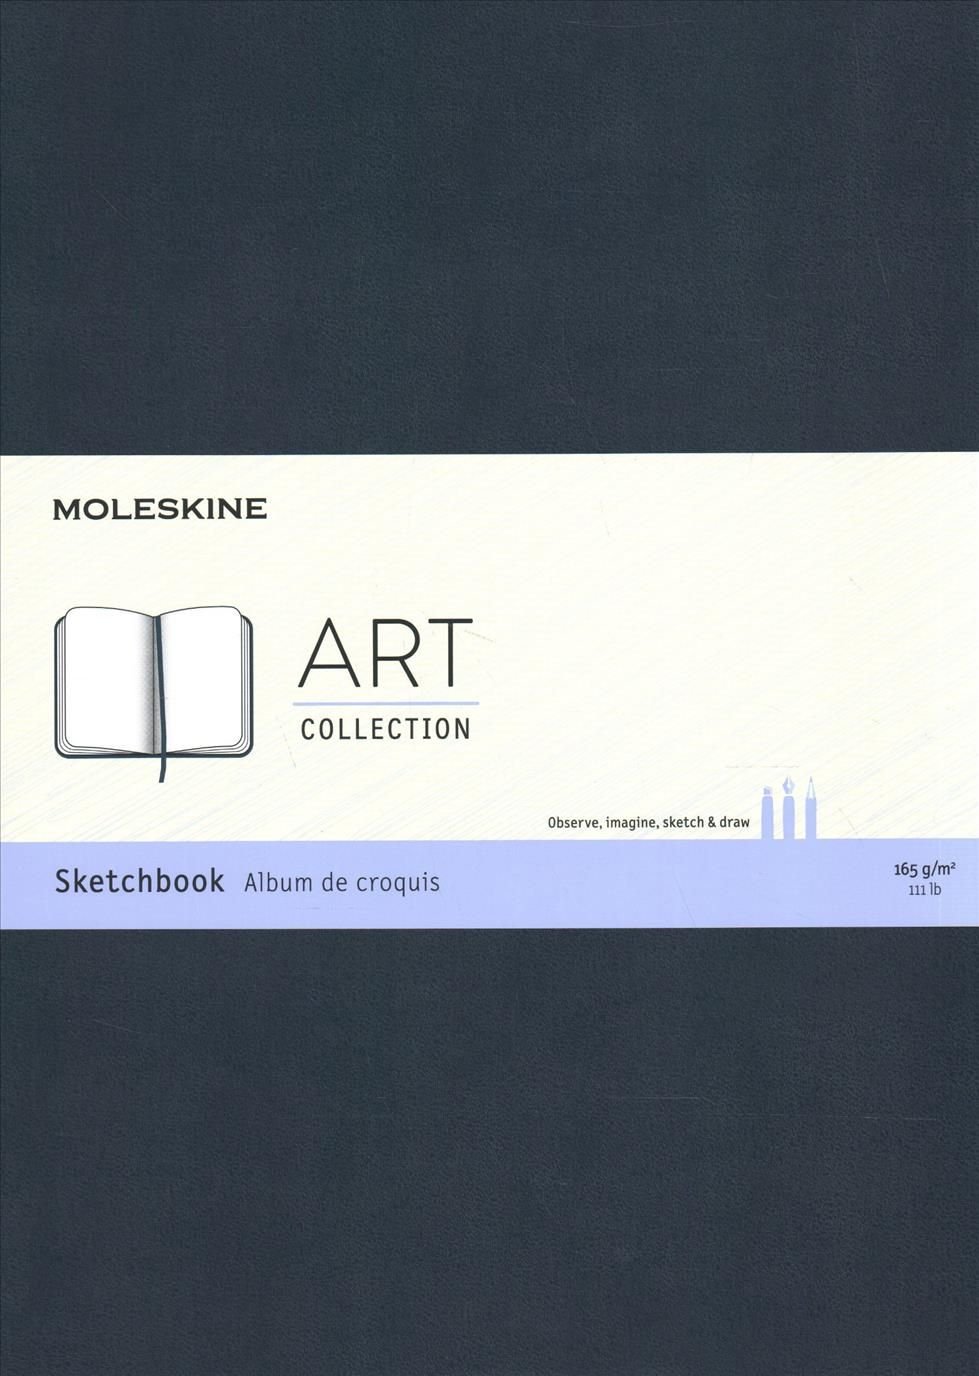 Moleskine Art Sketchbook